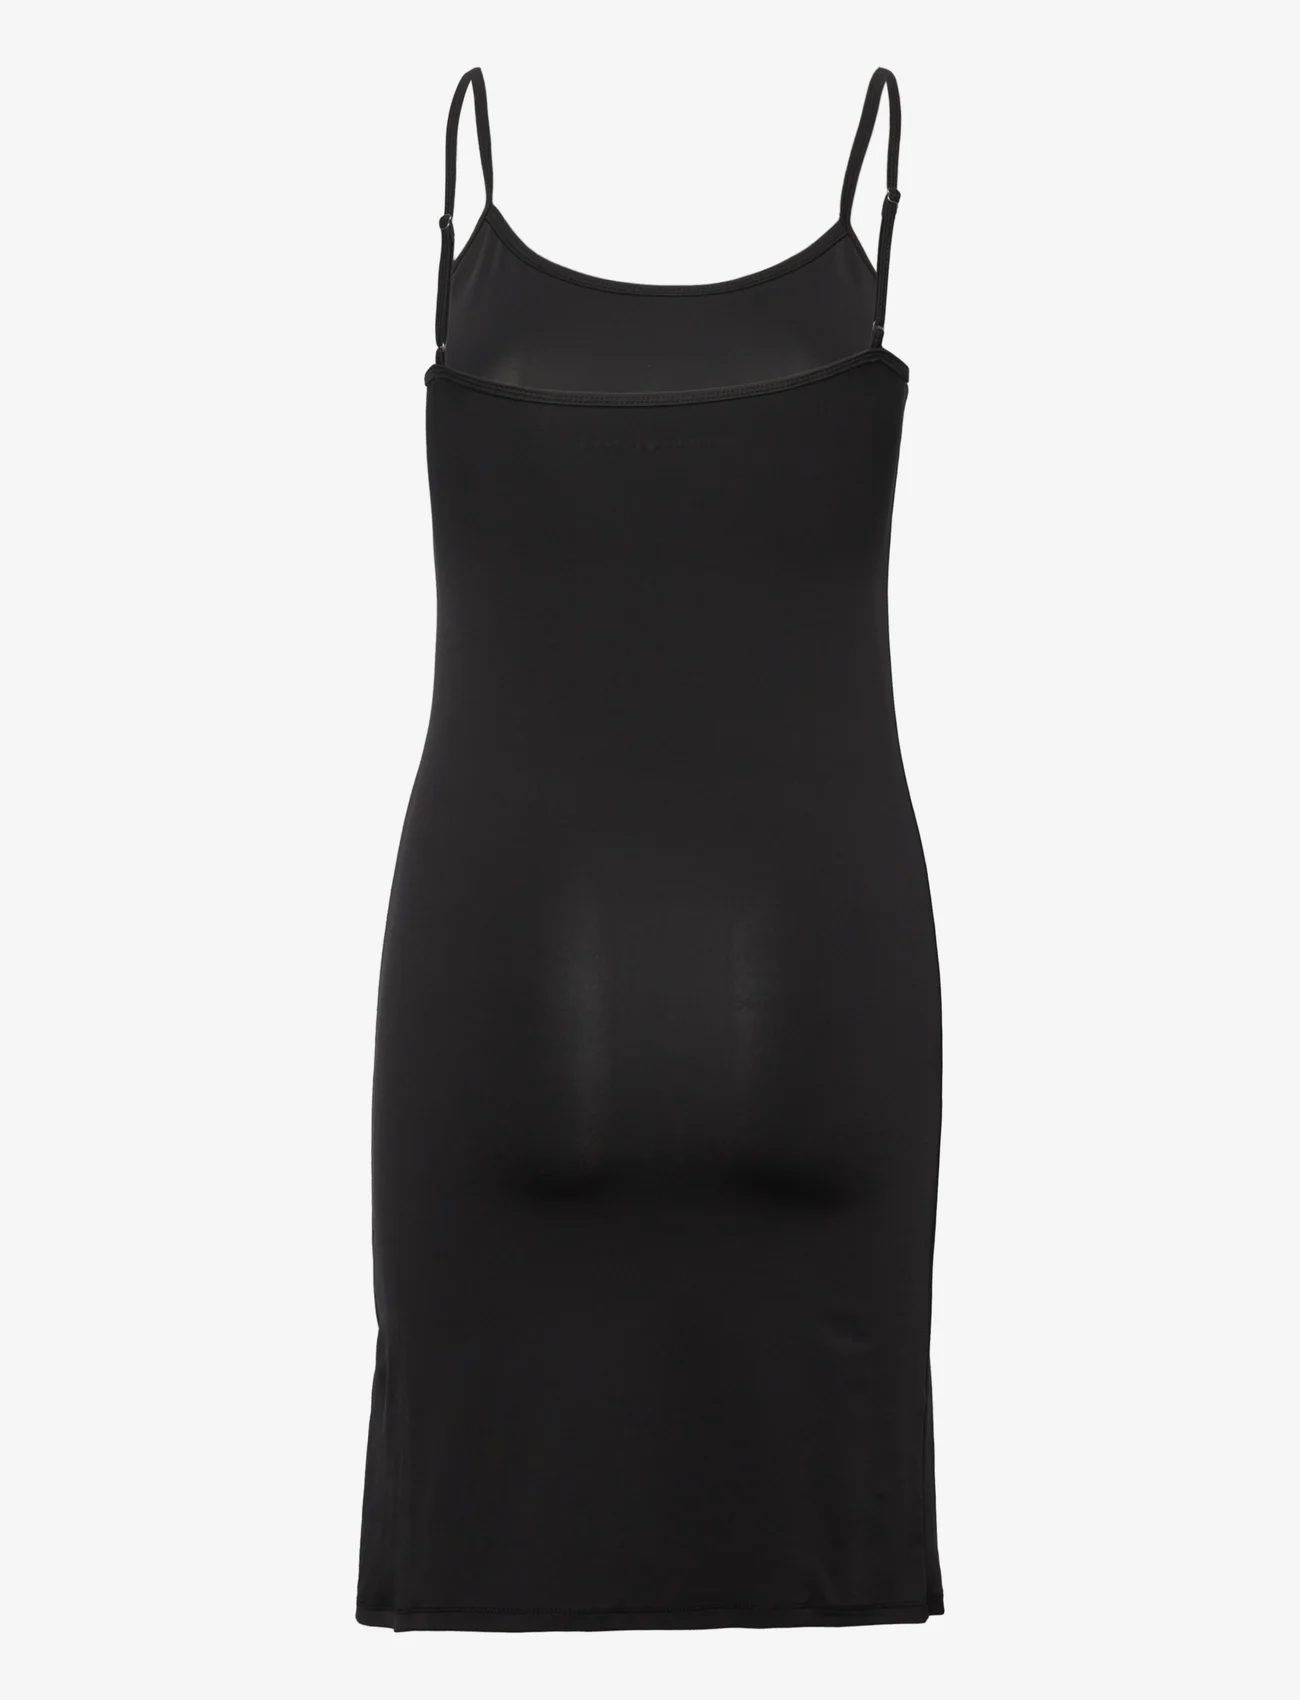 Bruuns Bazaar - Rada Rebecca slip dress - t-shirtkjoler - black - 1